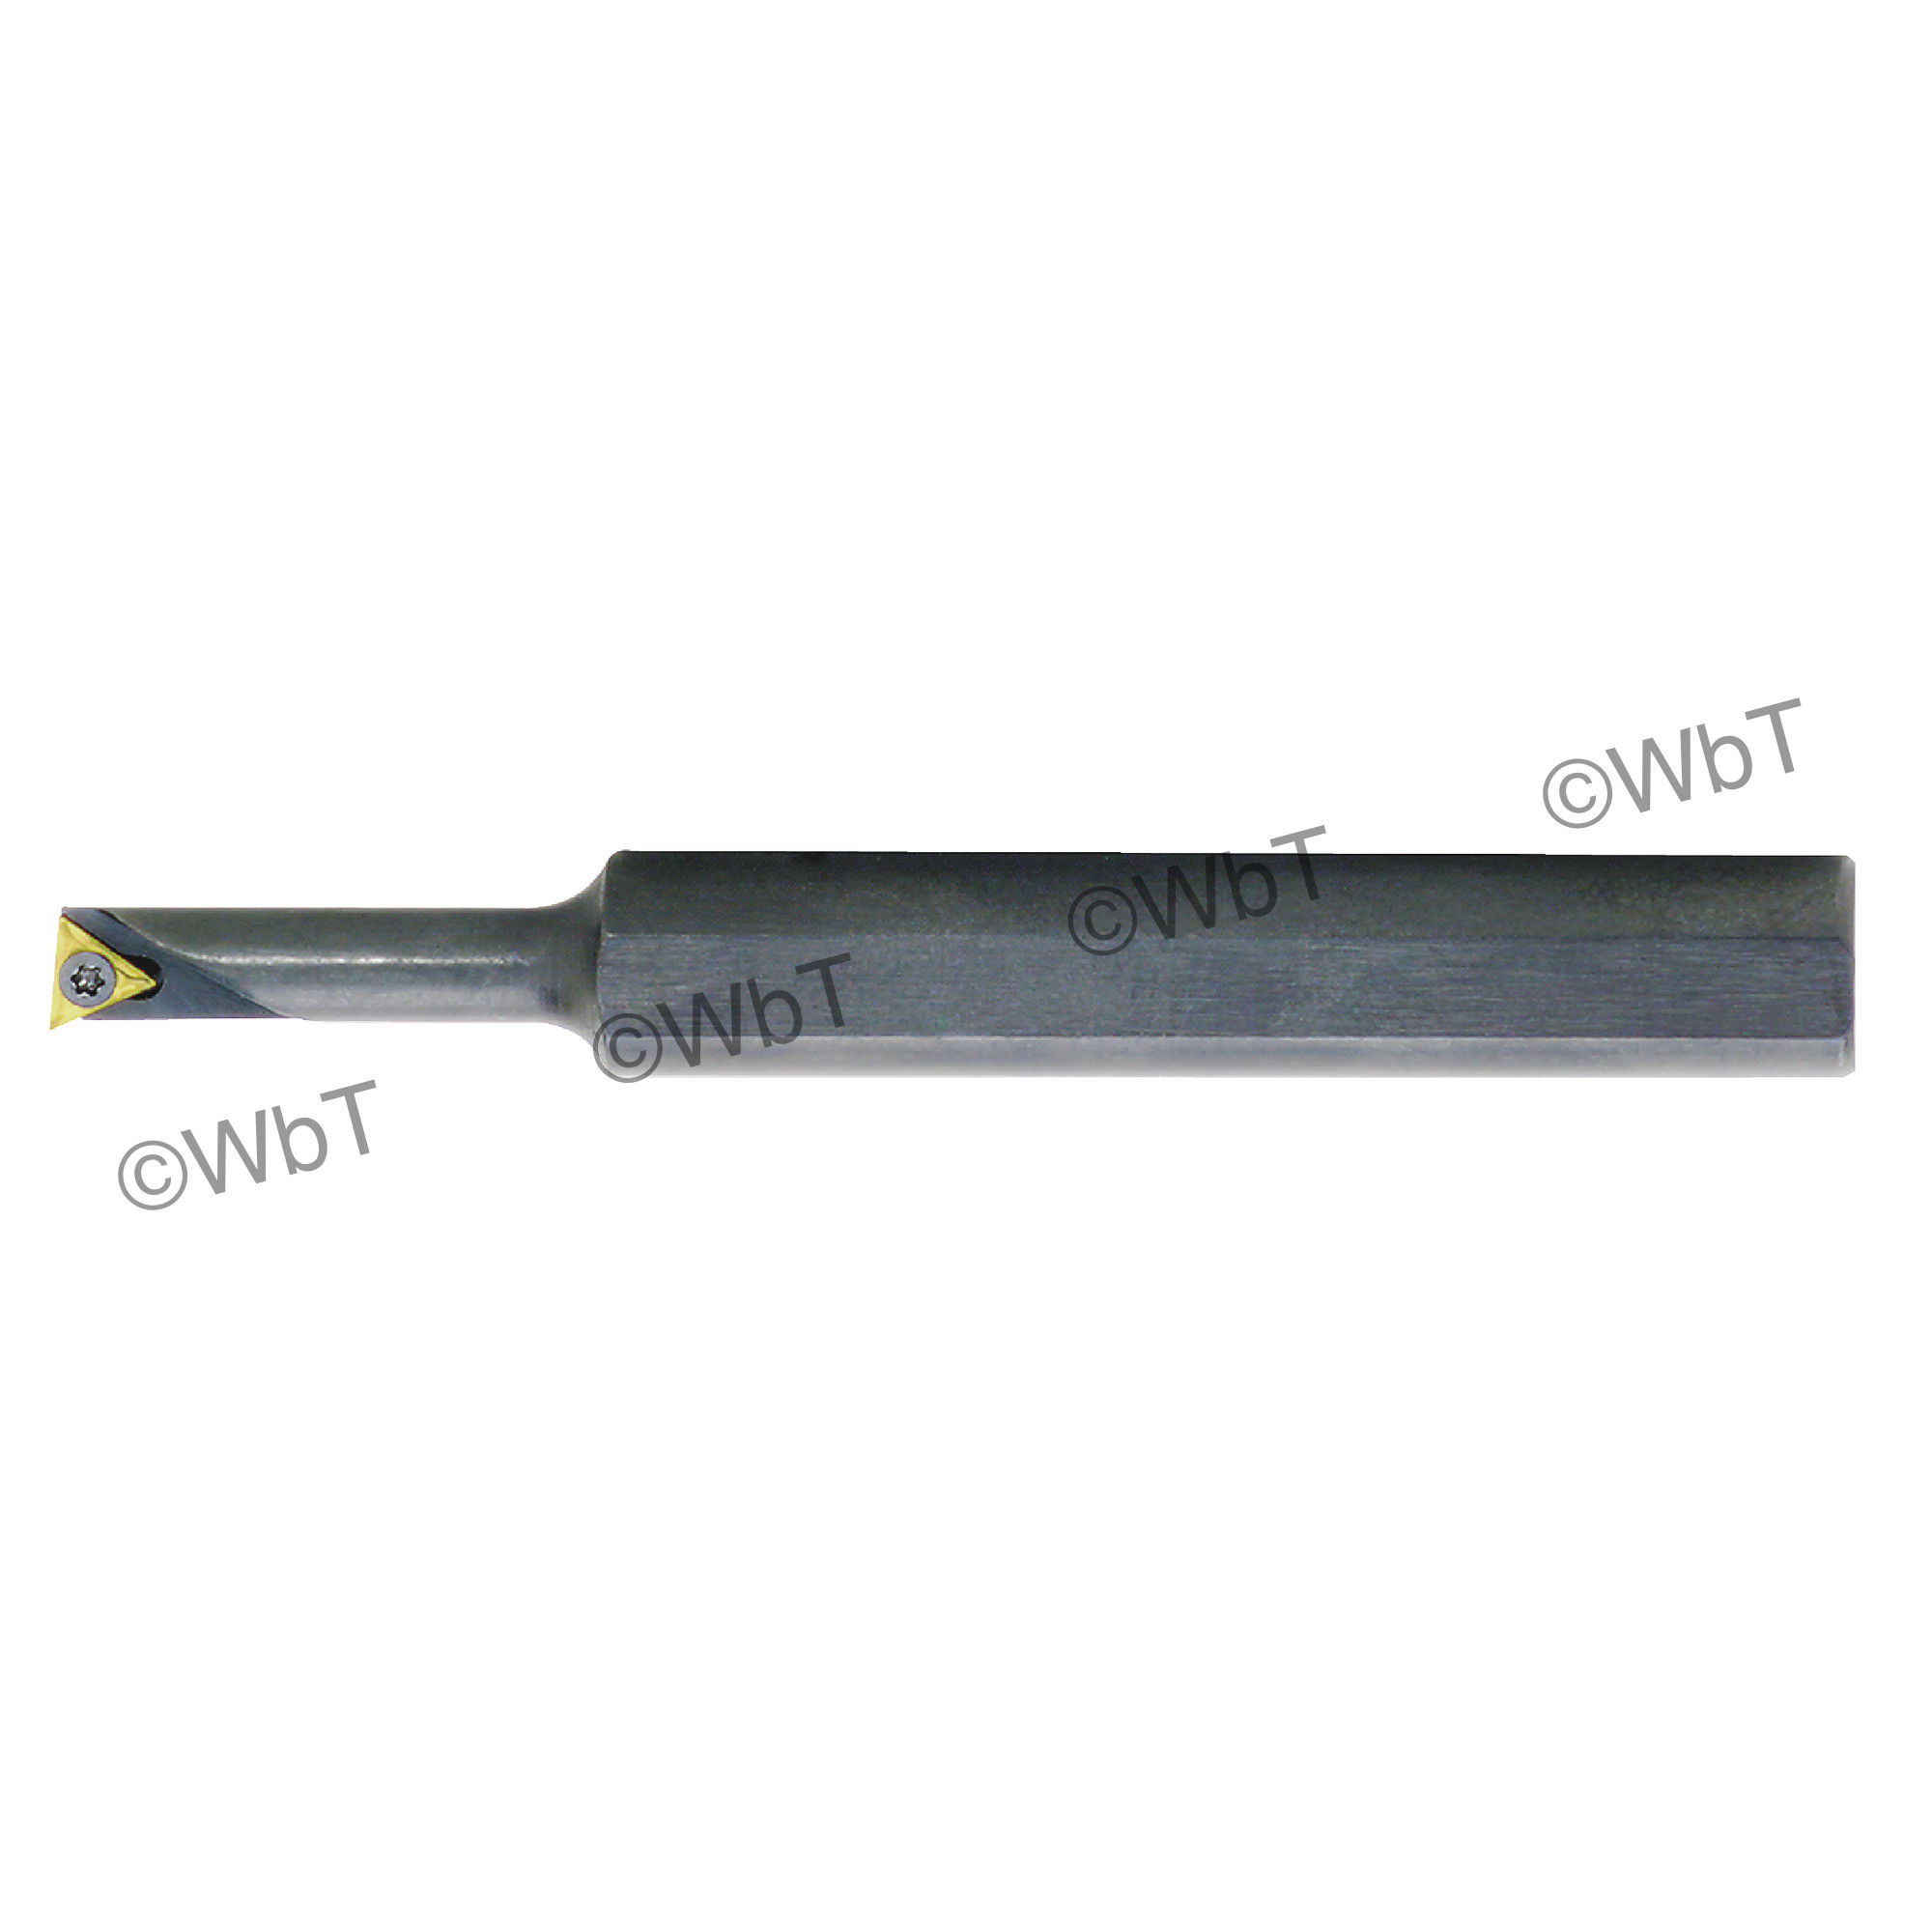 TTC PRODUCTION - NBS6-5-4 / Steel Boring Bar / 0.500@QUOT: Shank / TCMT1.210.5 / Right Hand